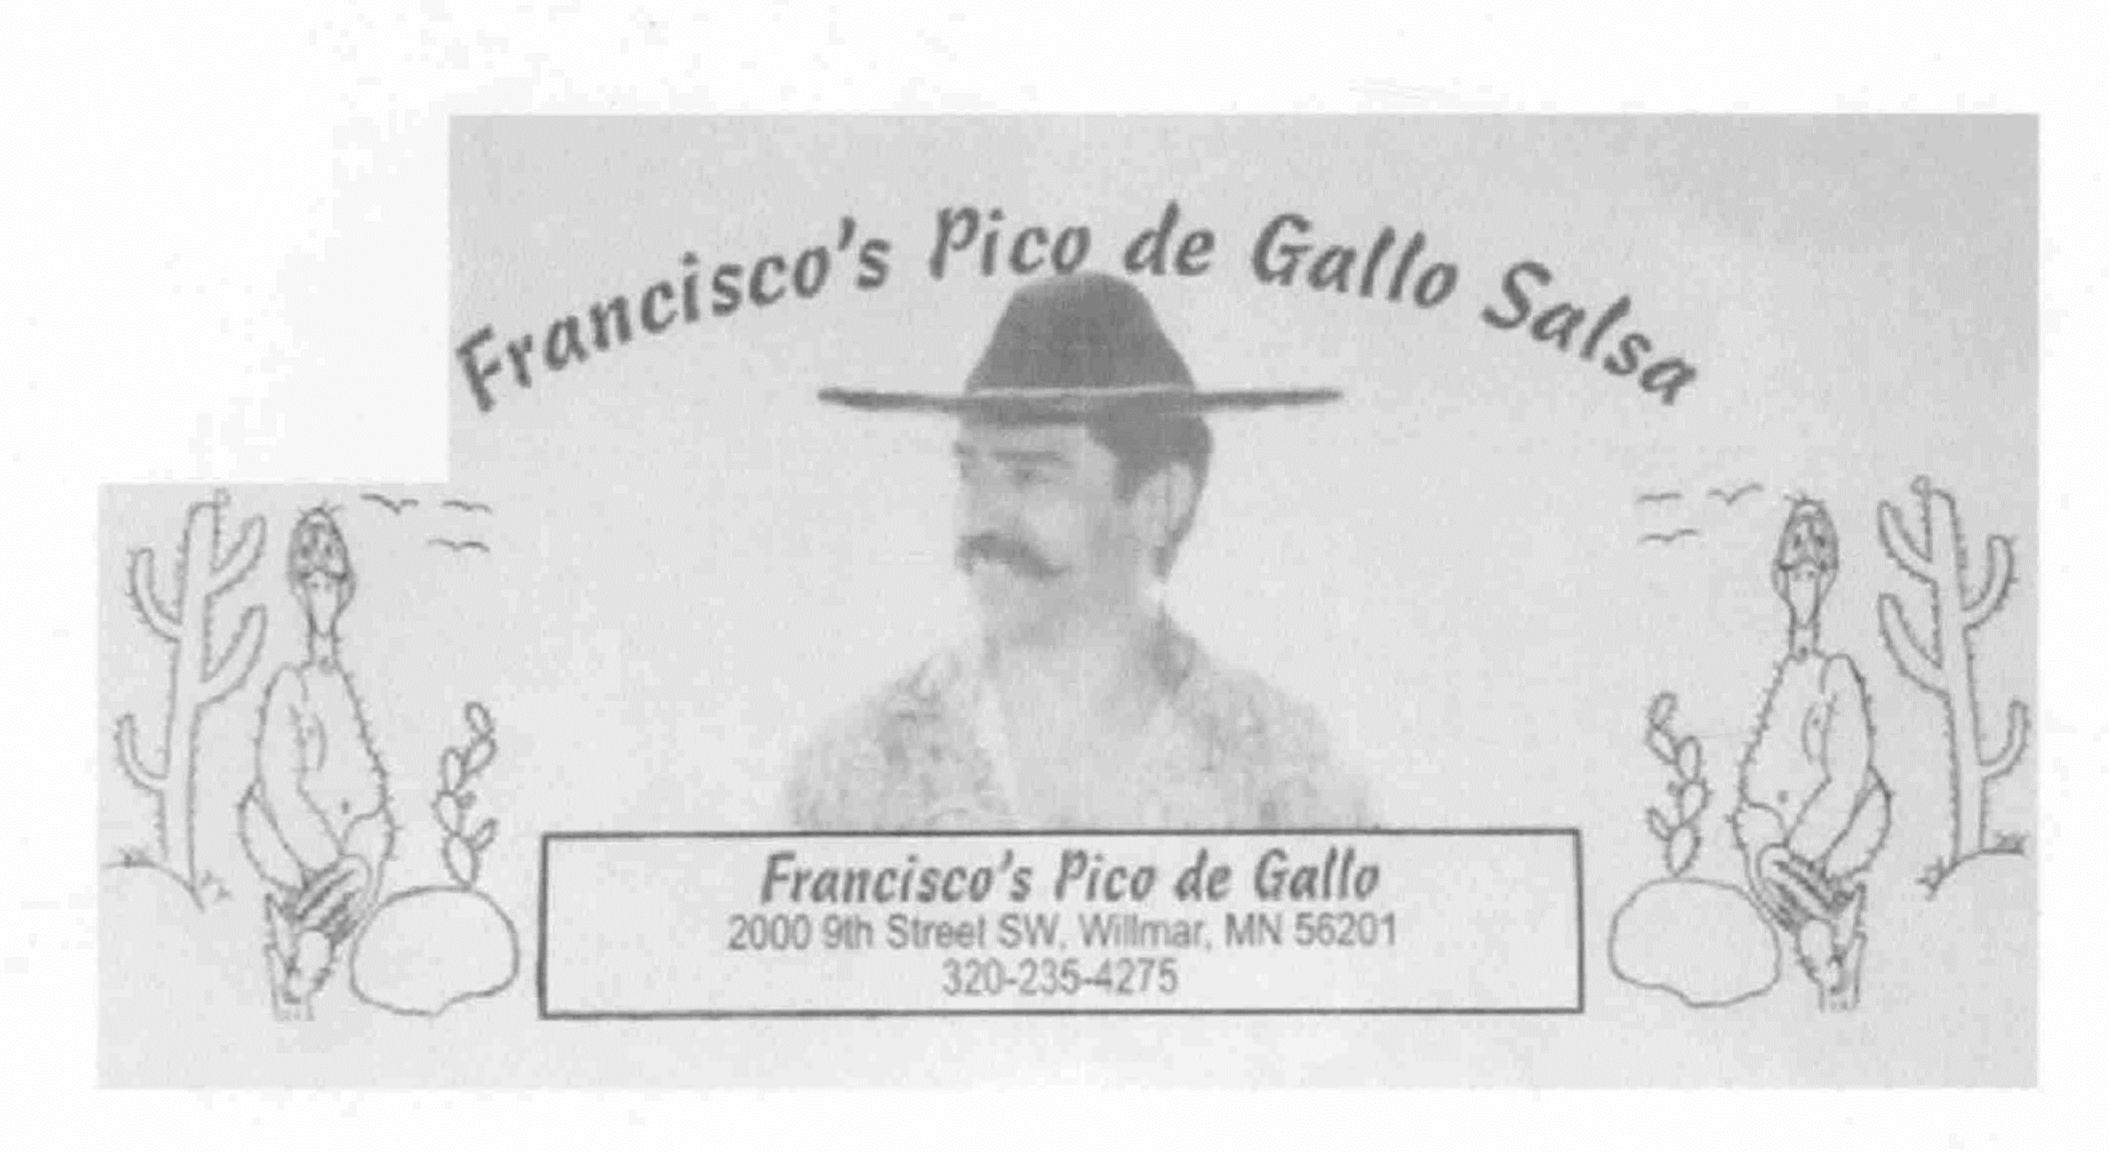  FRANCISCO'S PICO DE GALLO SALSA